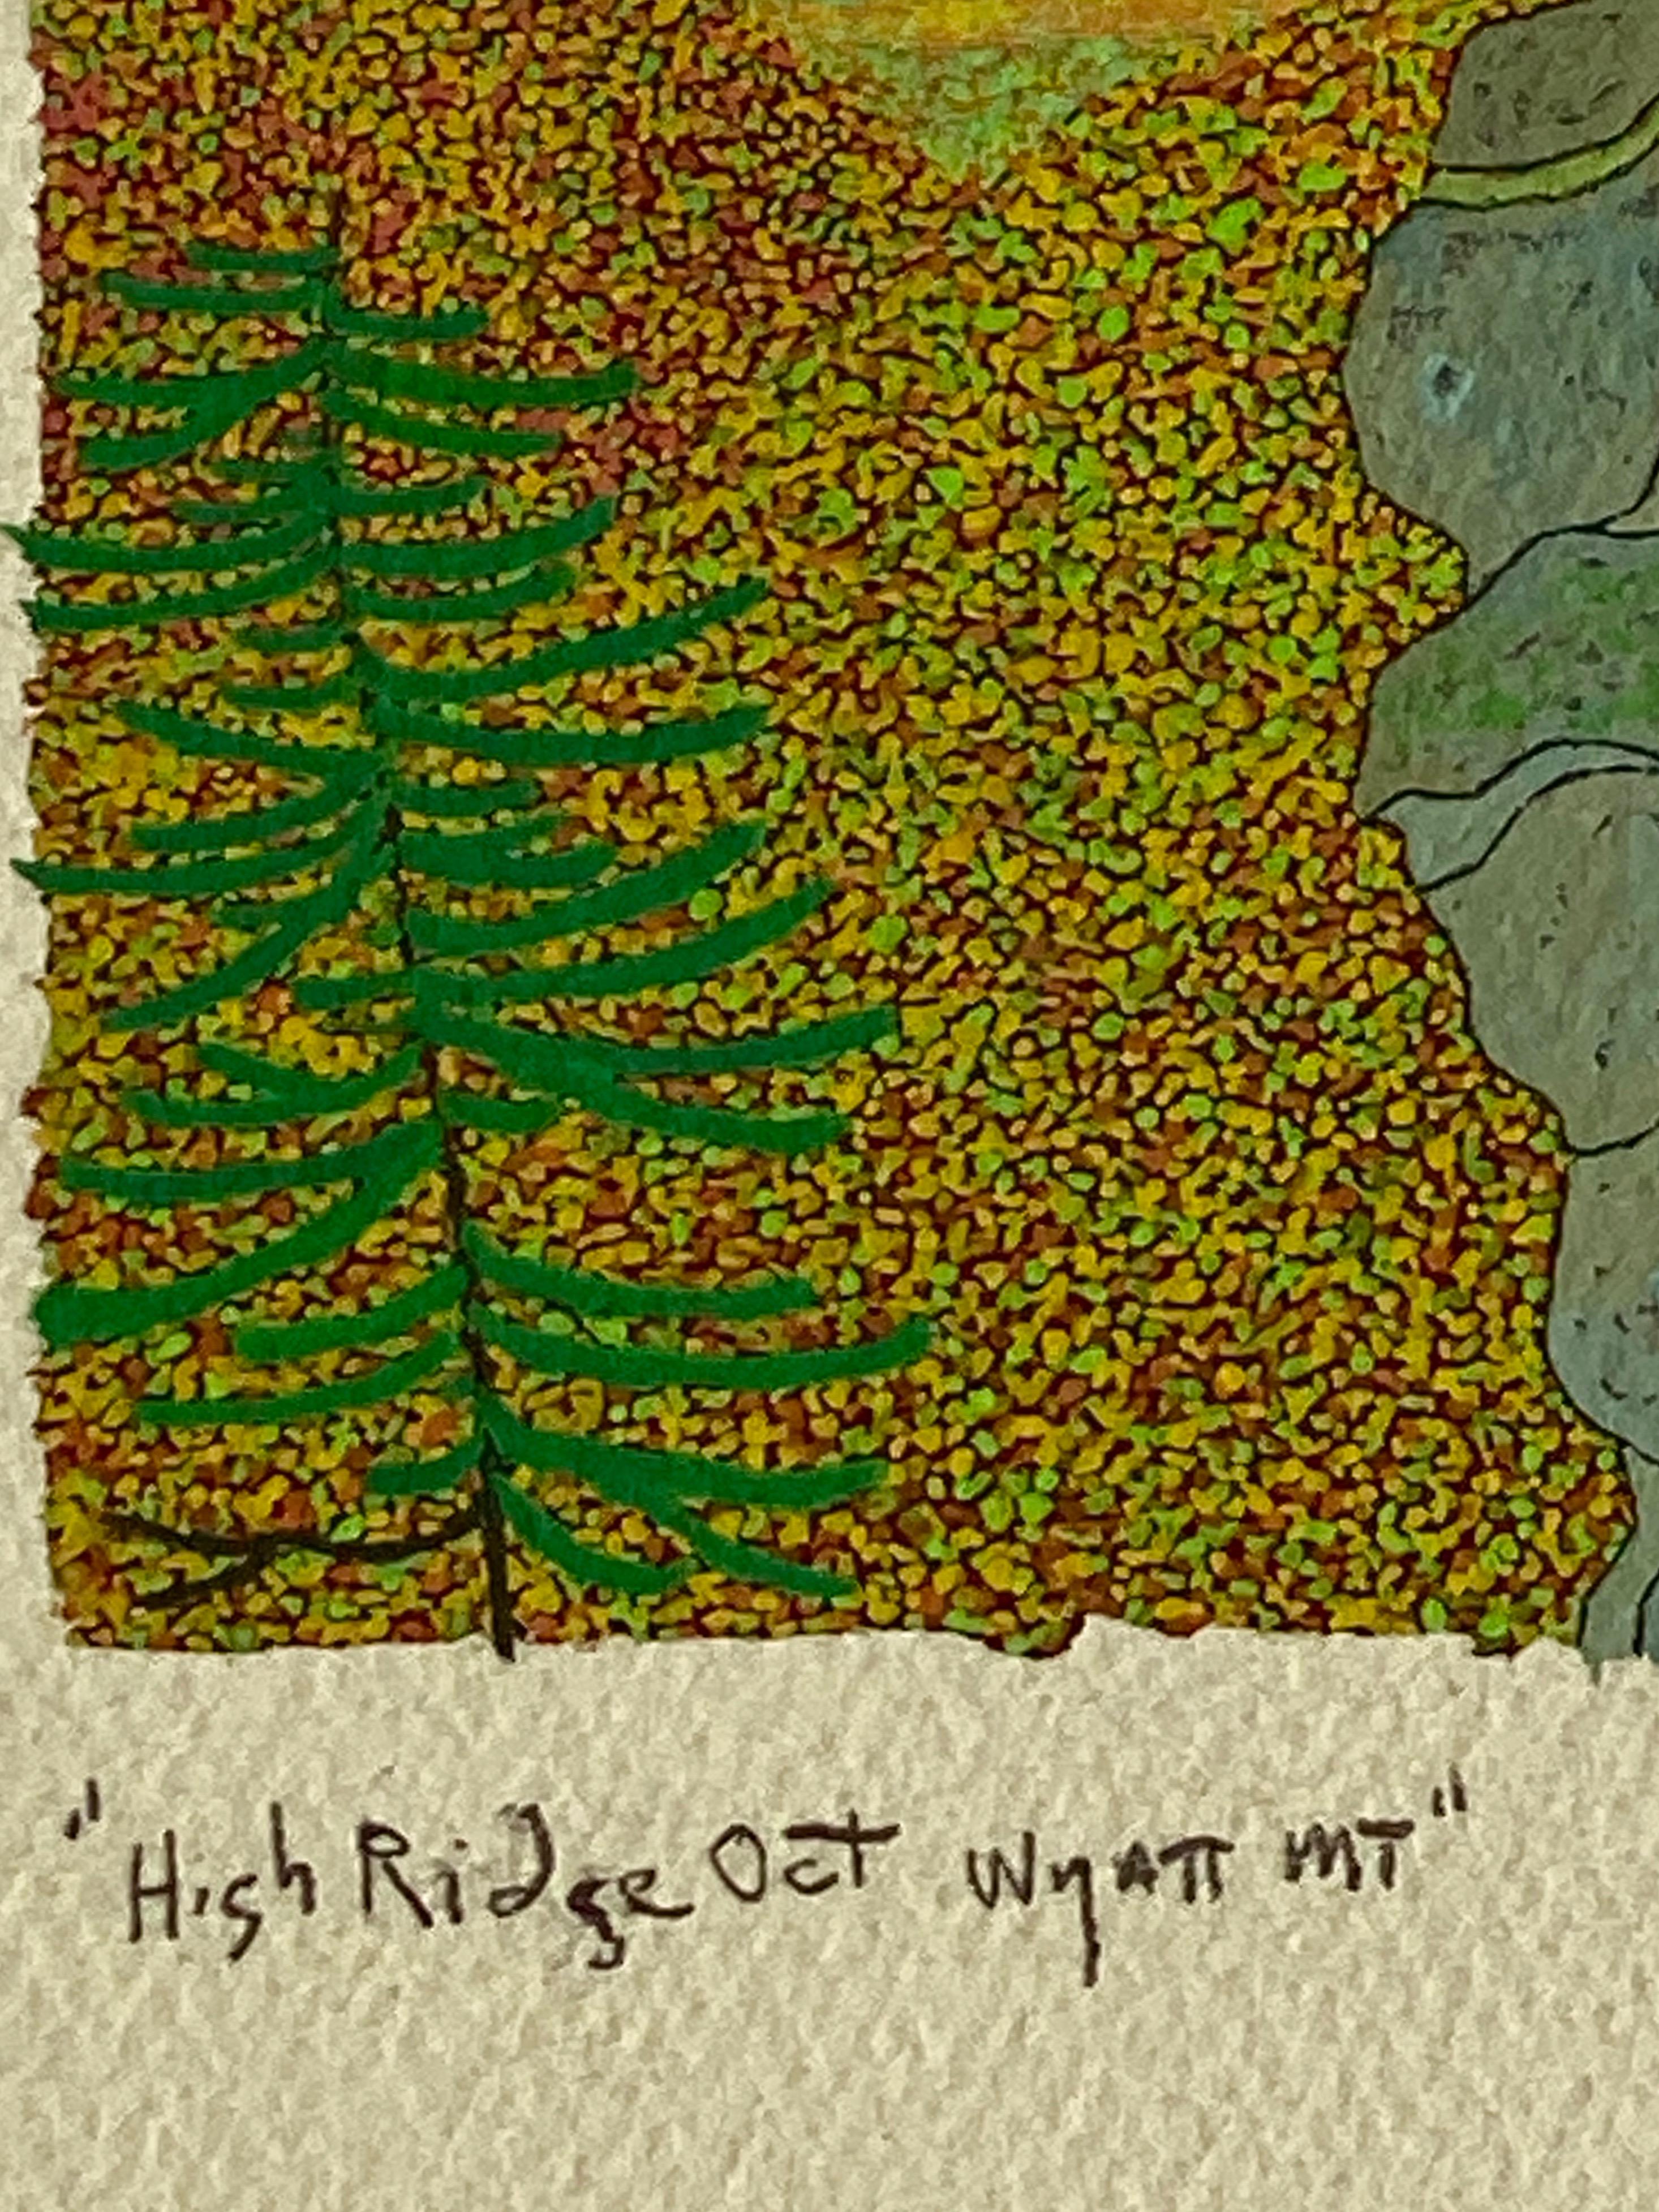 High Ridge, October, Wyatt Mt., Gray Mountain, Green, Yellow, Autumn Foliage For Sale 3